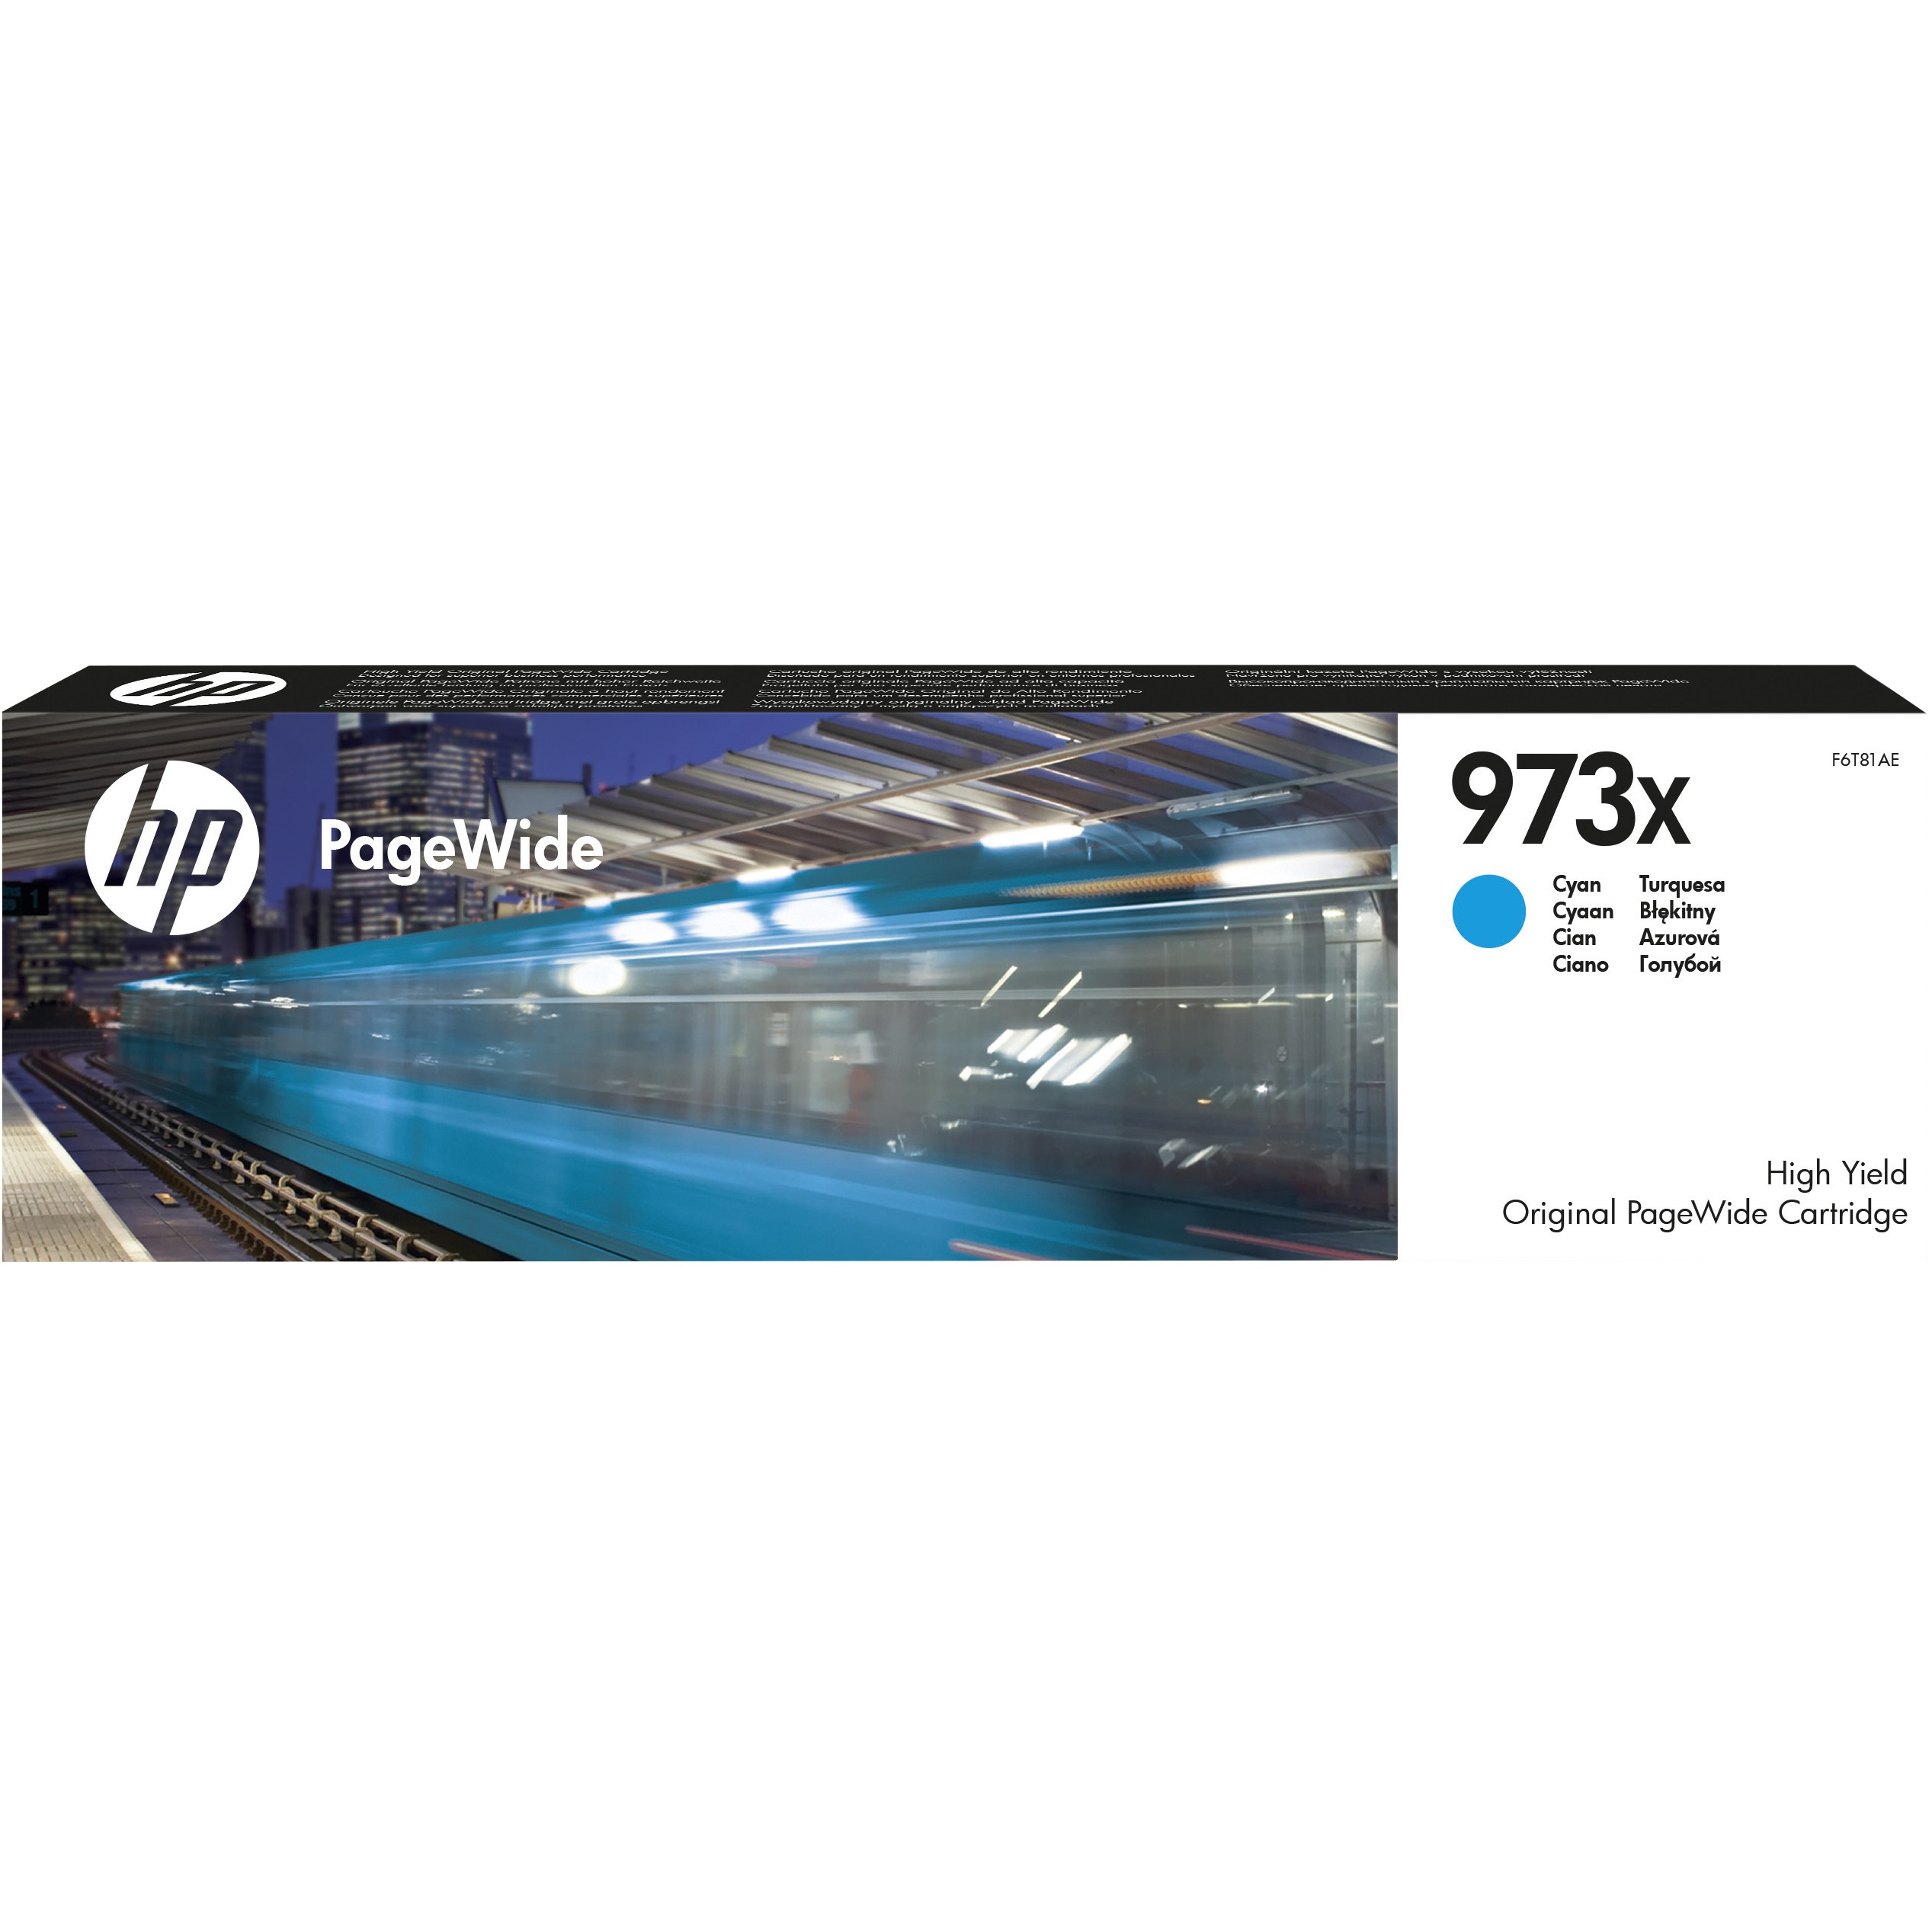 HP 973X High Yield Cyan Original PageWide Cartridge ink cartridge - F6T81AE